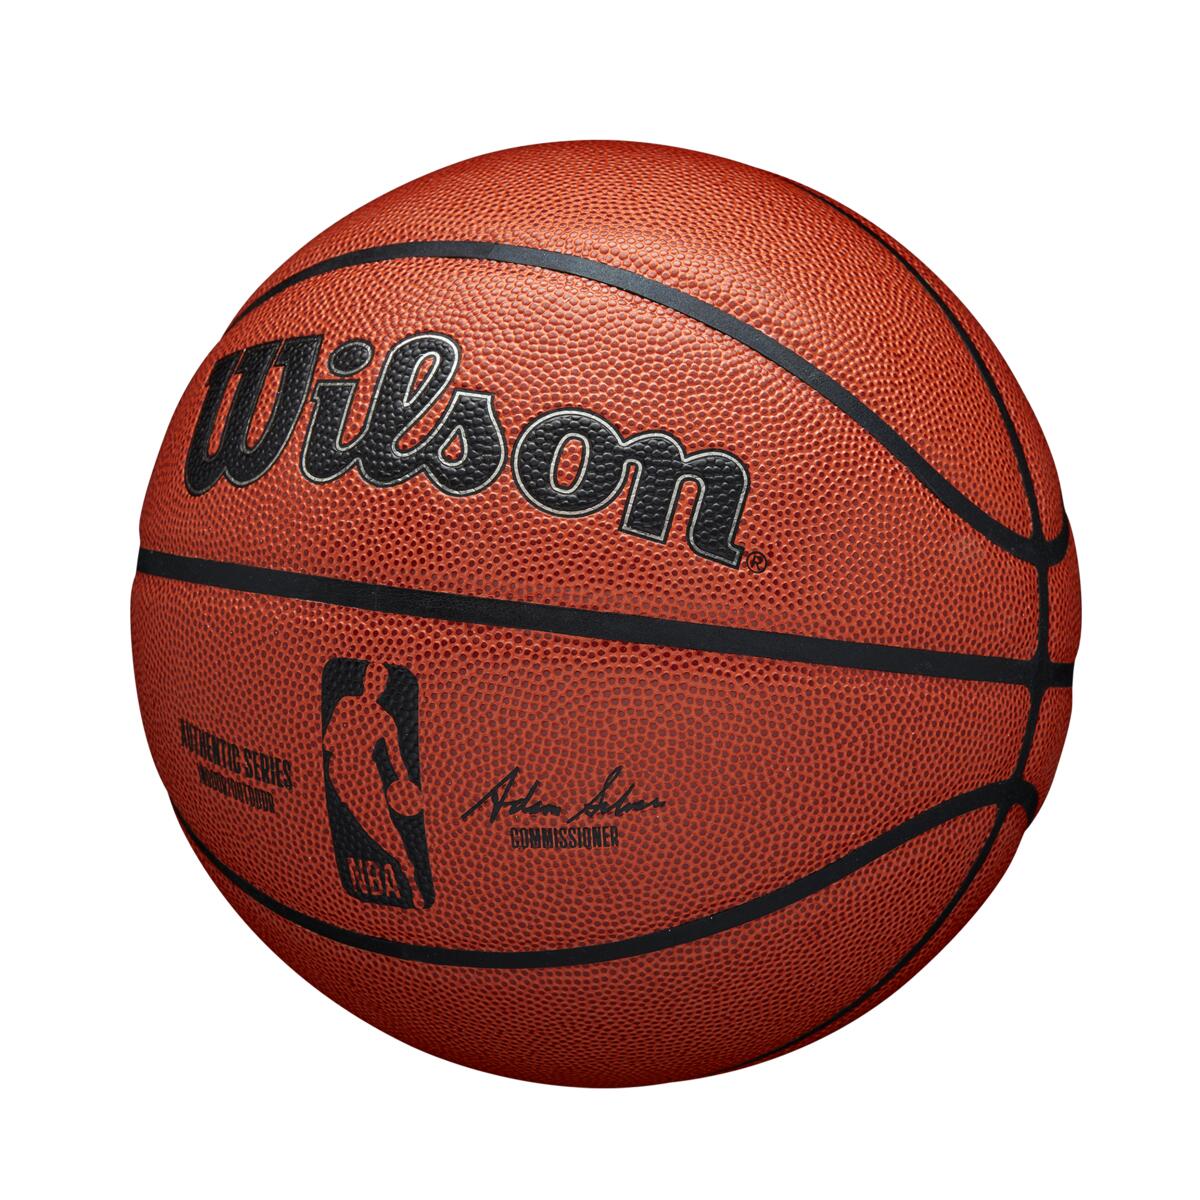 Bola de Basquete NBA Authentic #7